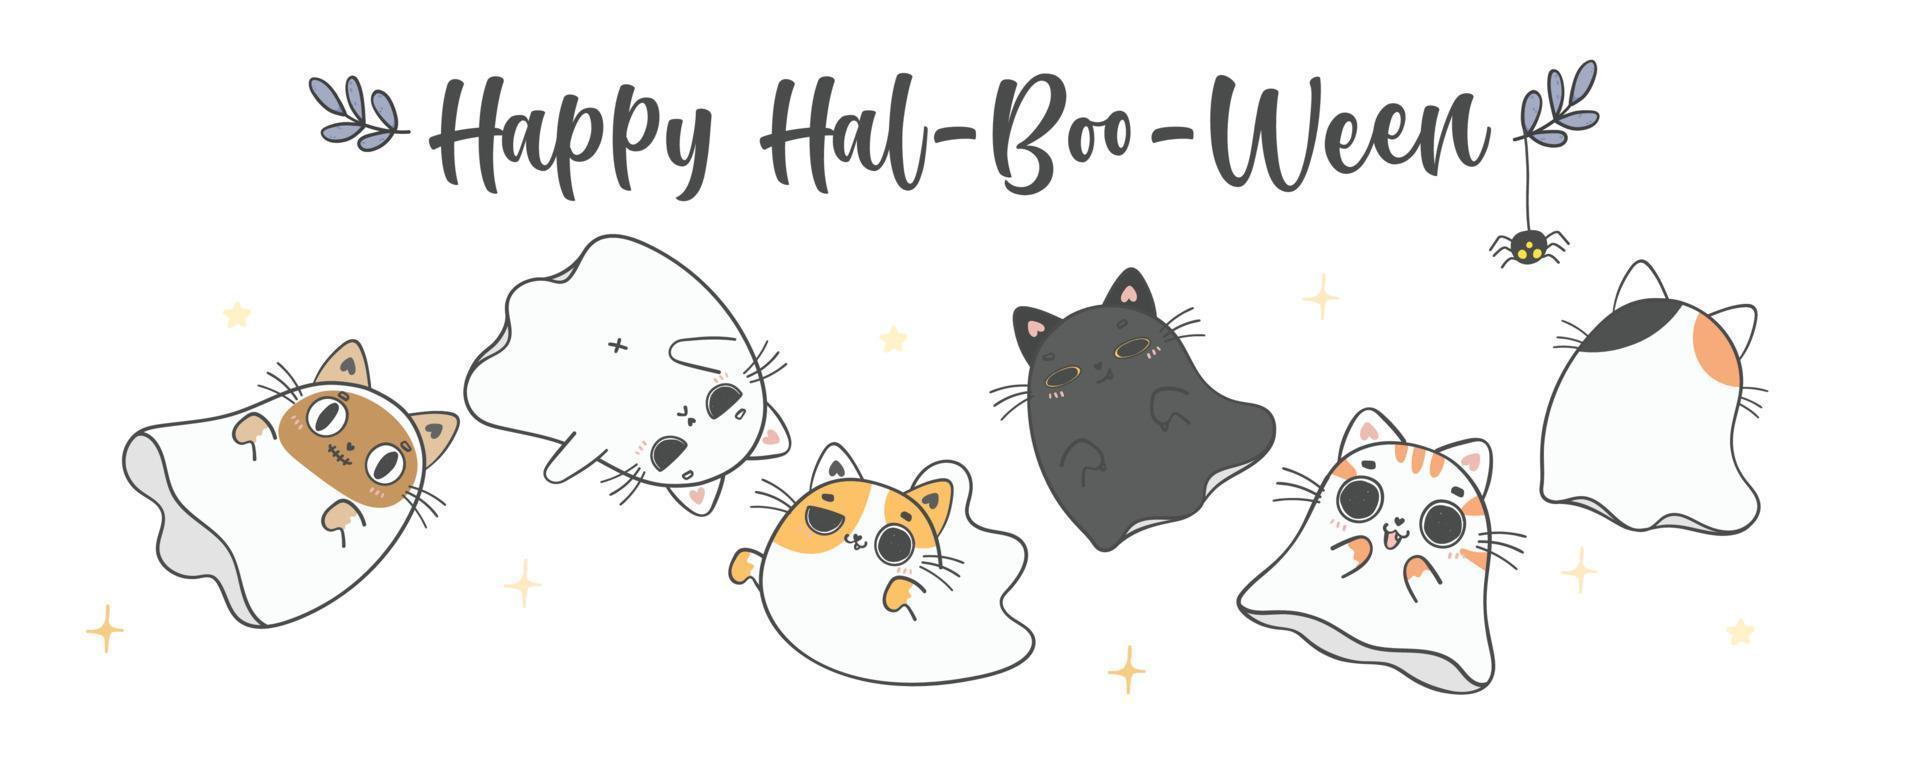 grupo de lindo halloween gatito gato fantasma dibujos animados mascota garabato dibujo a mano vector